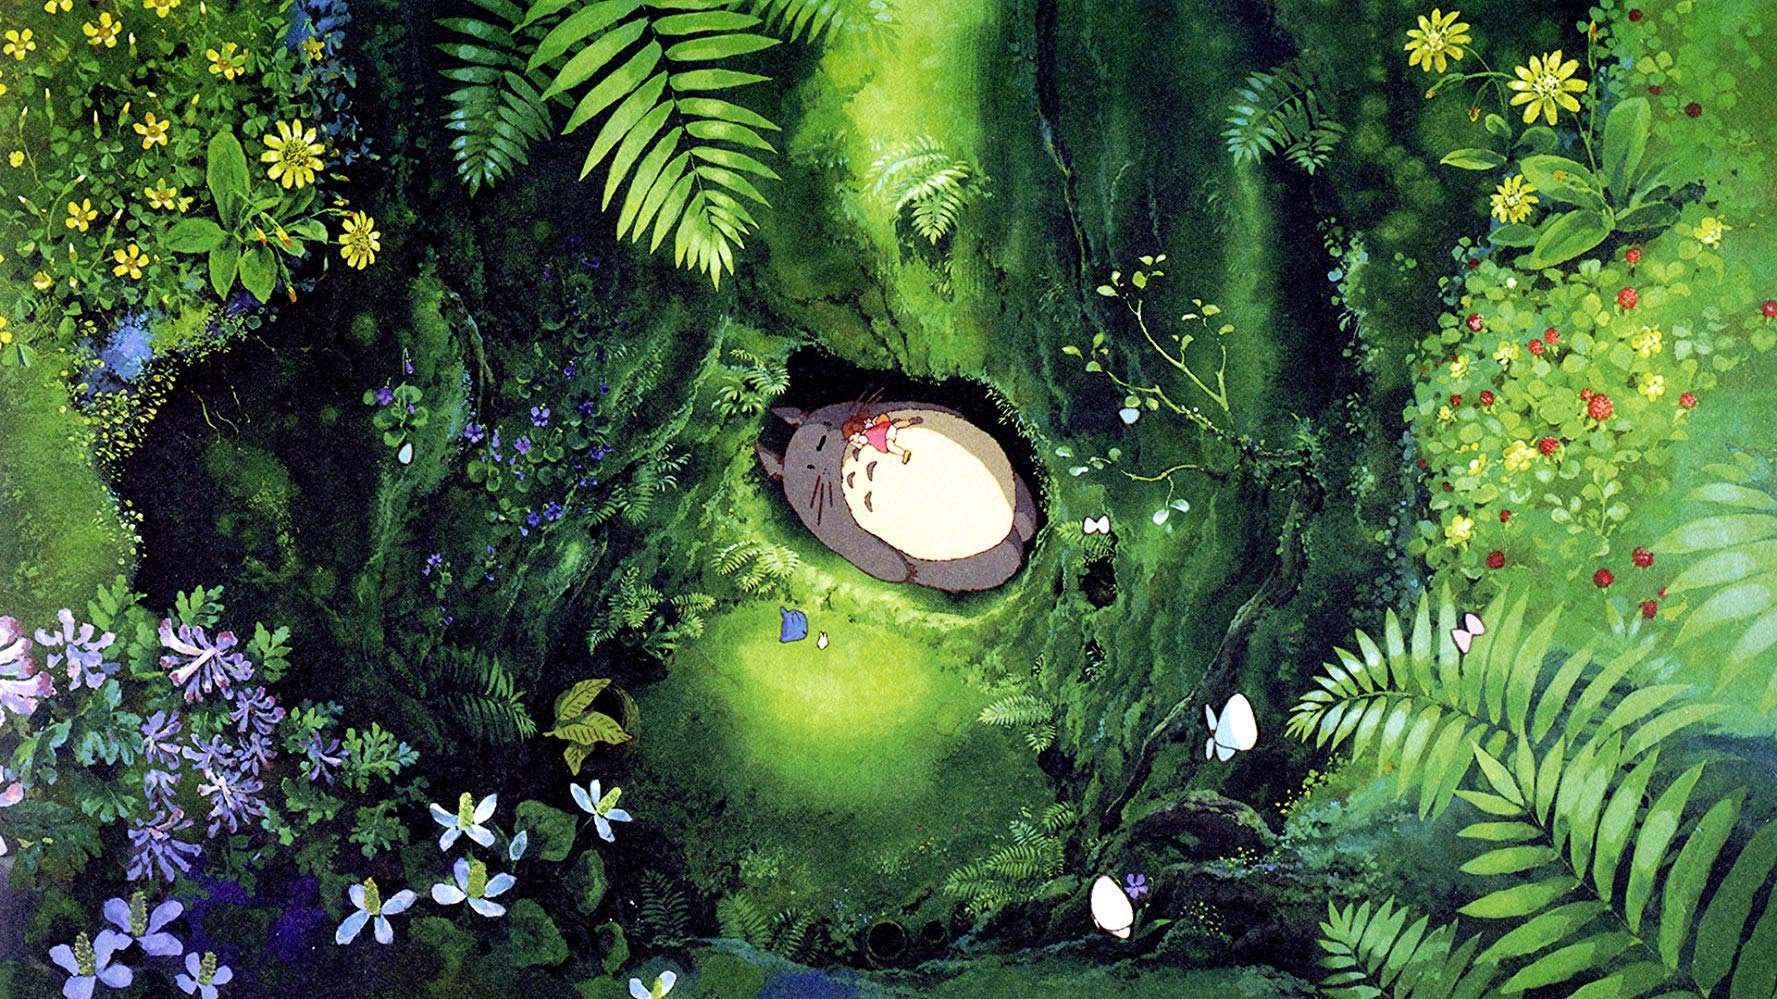 Totoro in tree